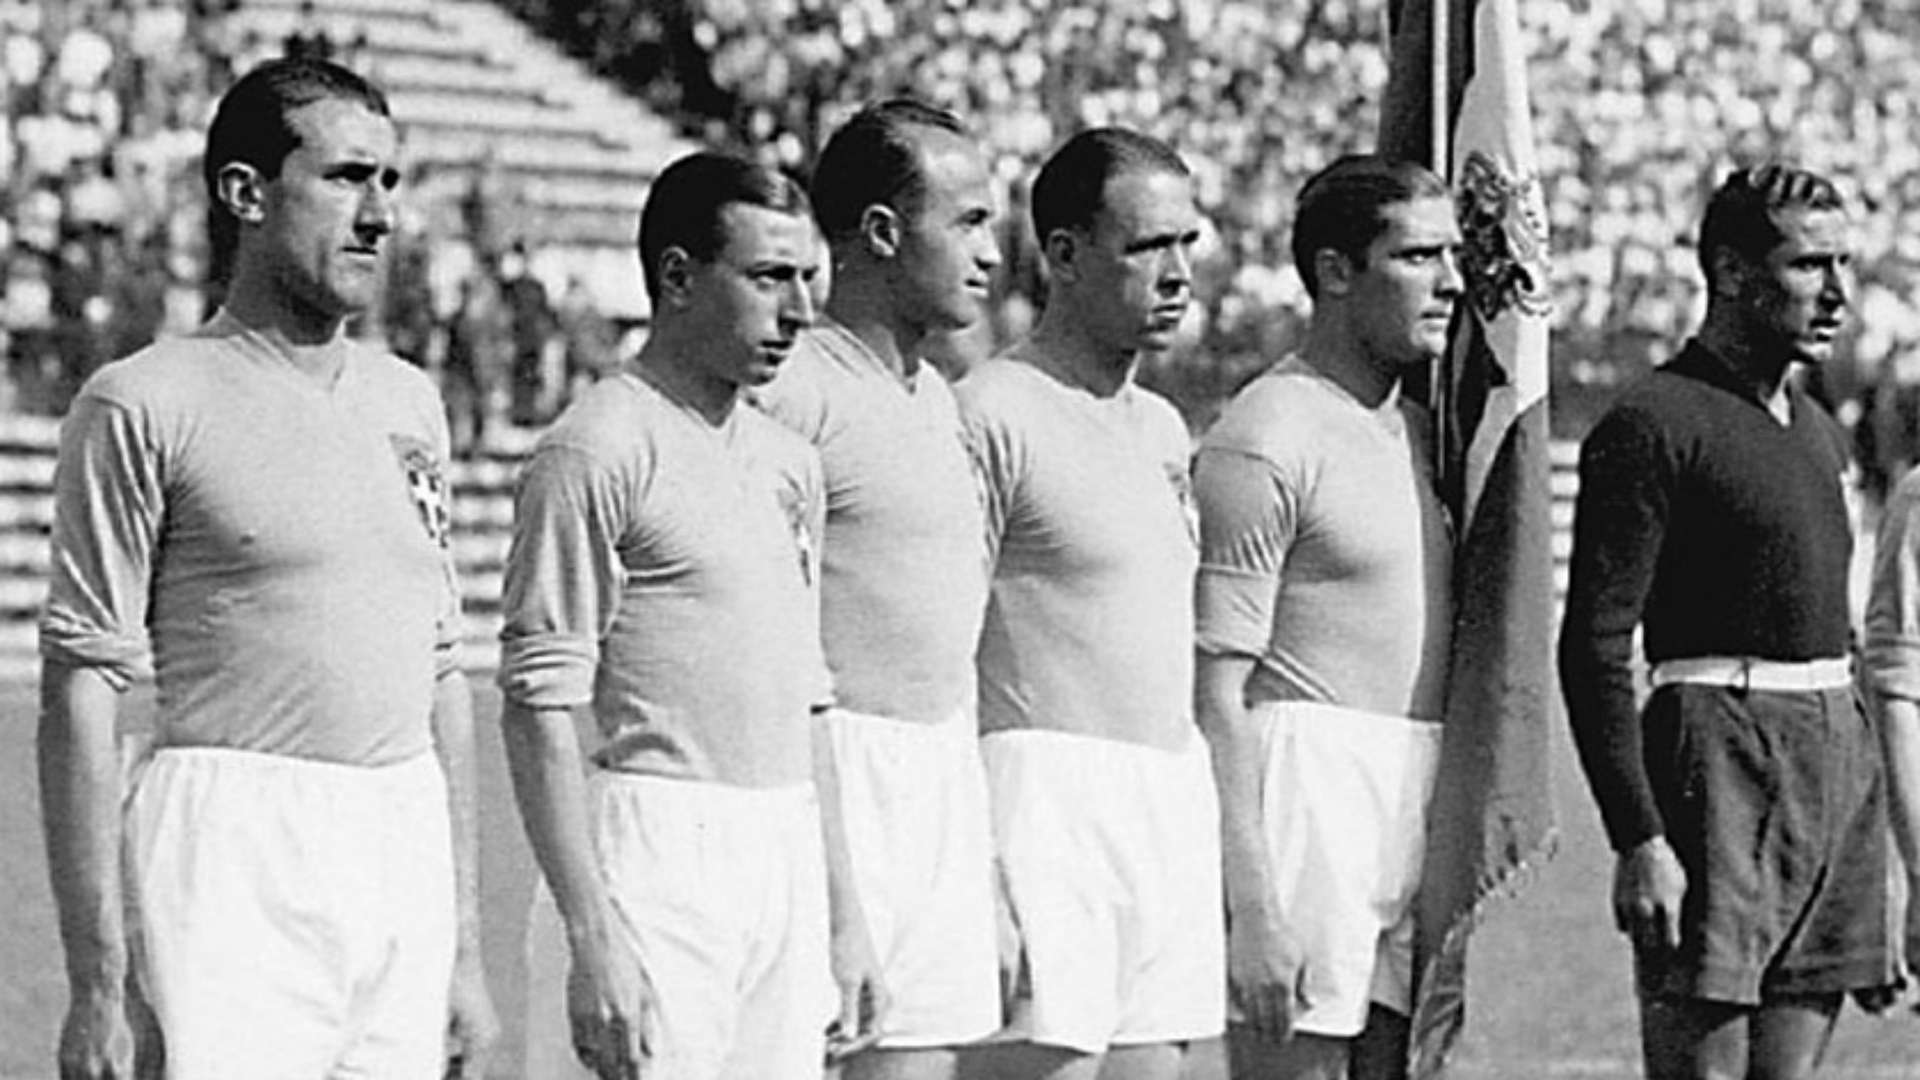 Angelo Schiavio Raimundo Orsi Giovanni Ferrari Enrique Guaita Giuseppe Meazza Italy 1934 World Cup 06101934